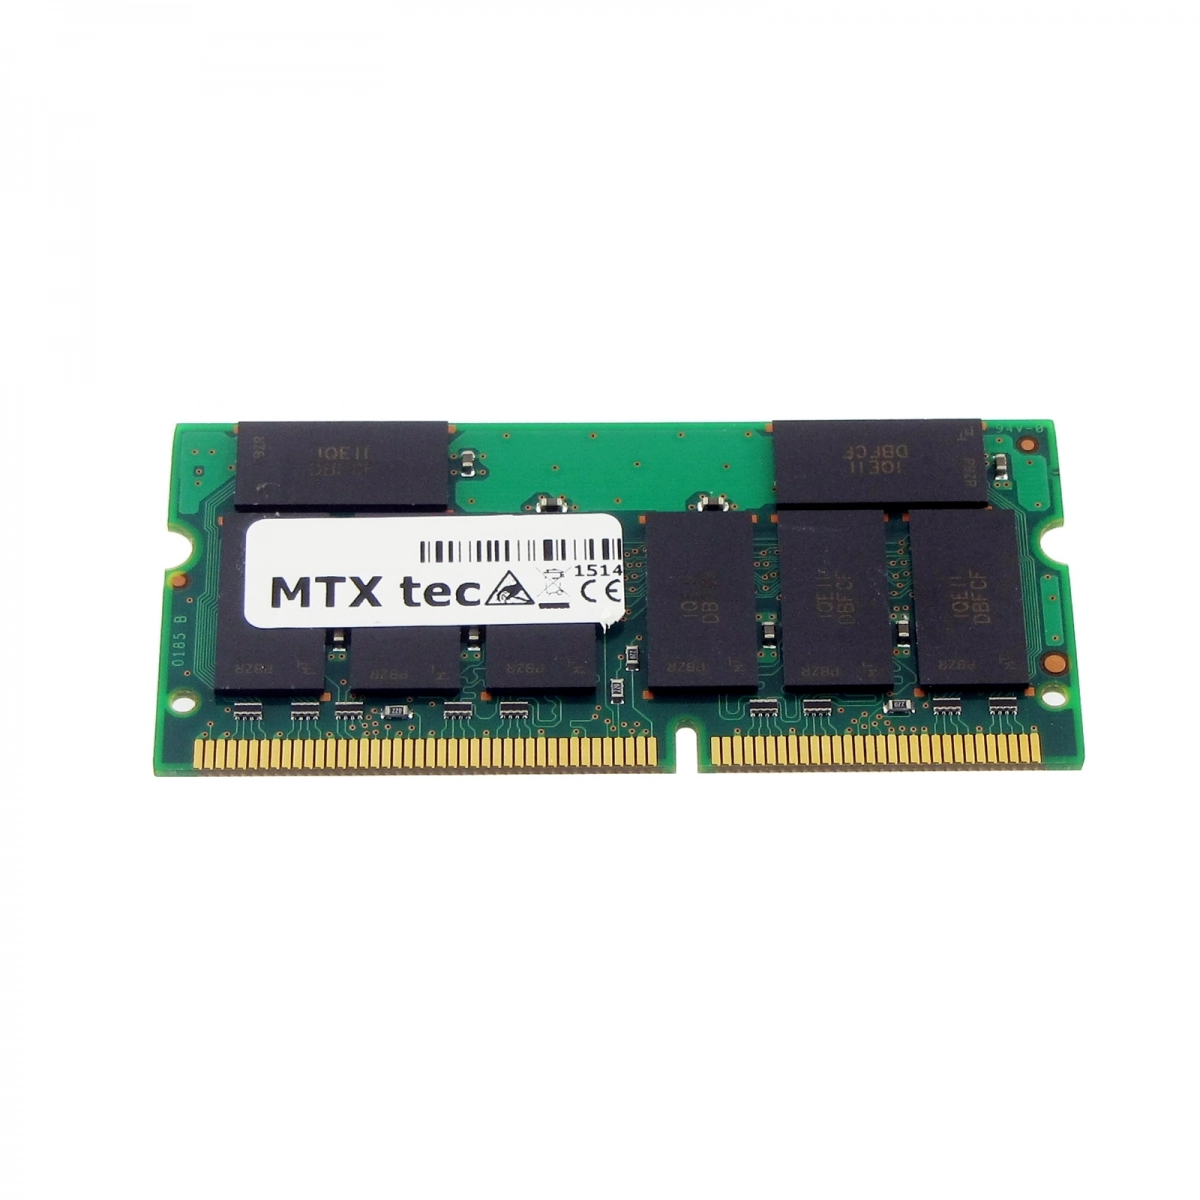 MTXtec Arbeitsspeicher MTXtec, 256 MB RAM